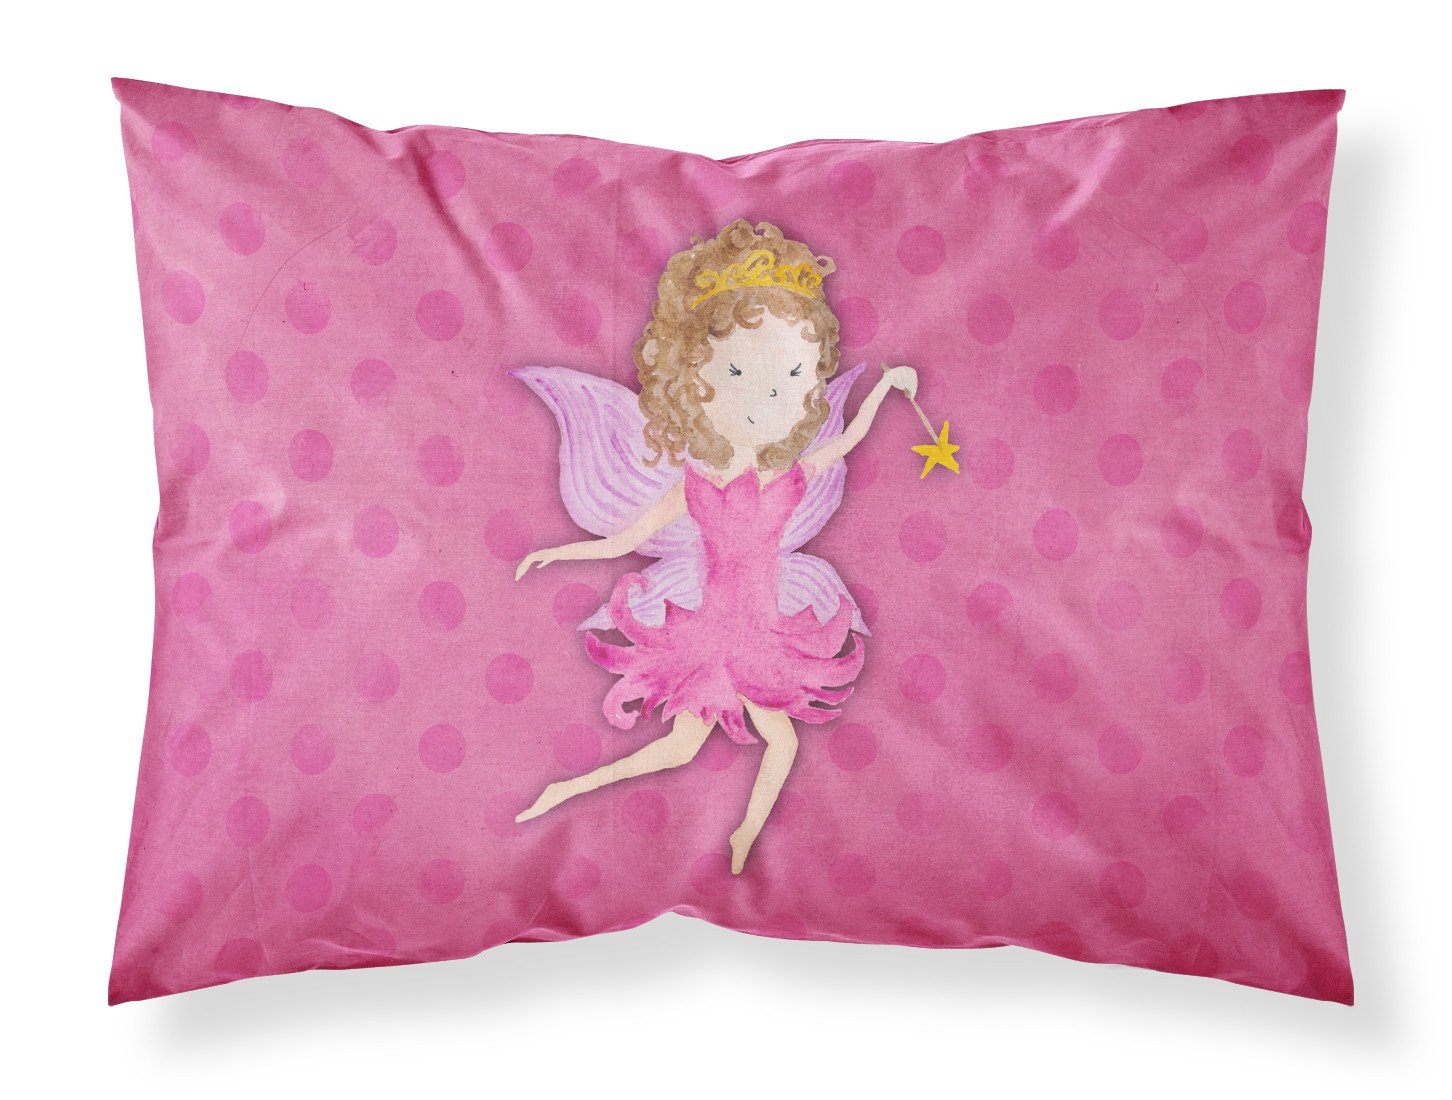 Fairy Princess Watercolor Fabric Standard Pillowcase BB7406PILLOWCASE by Caroline's Treasures